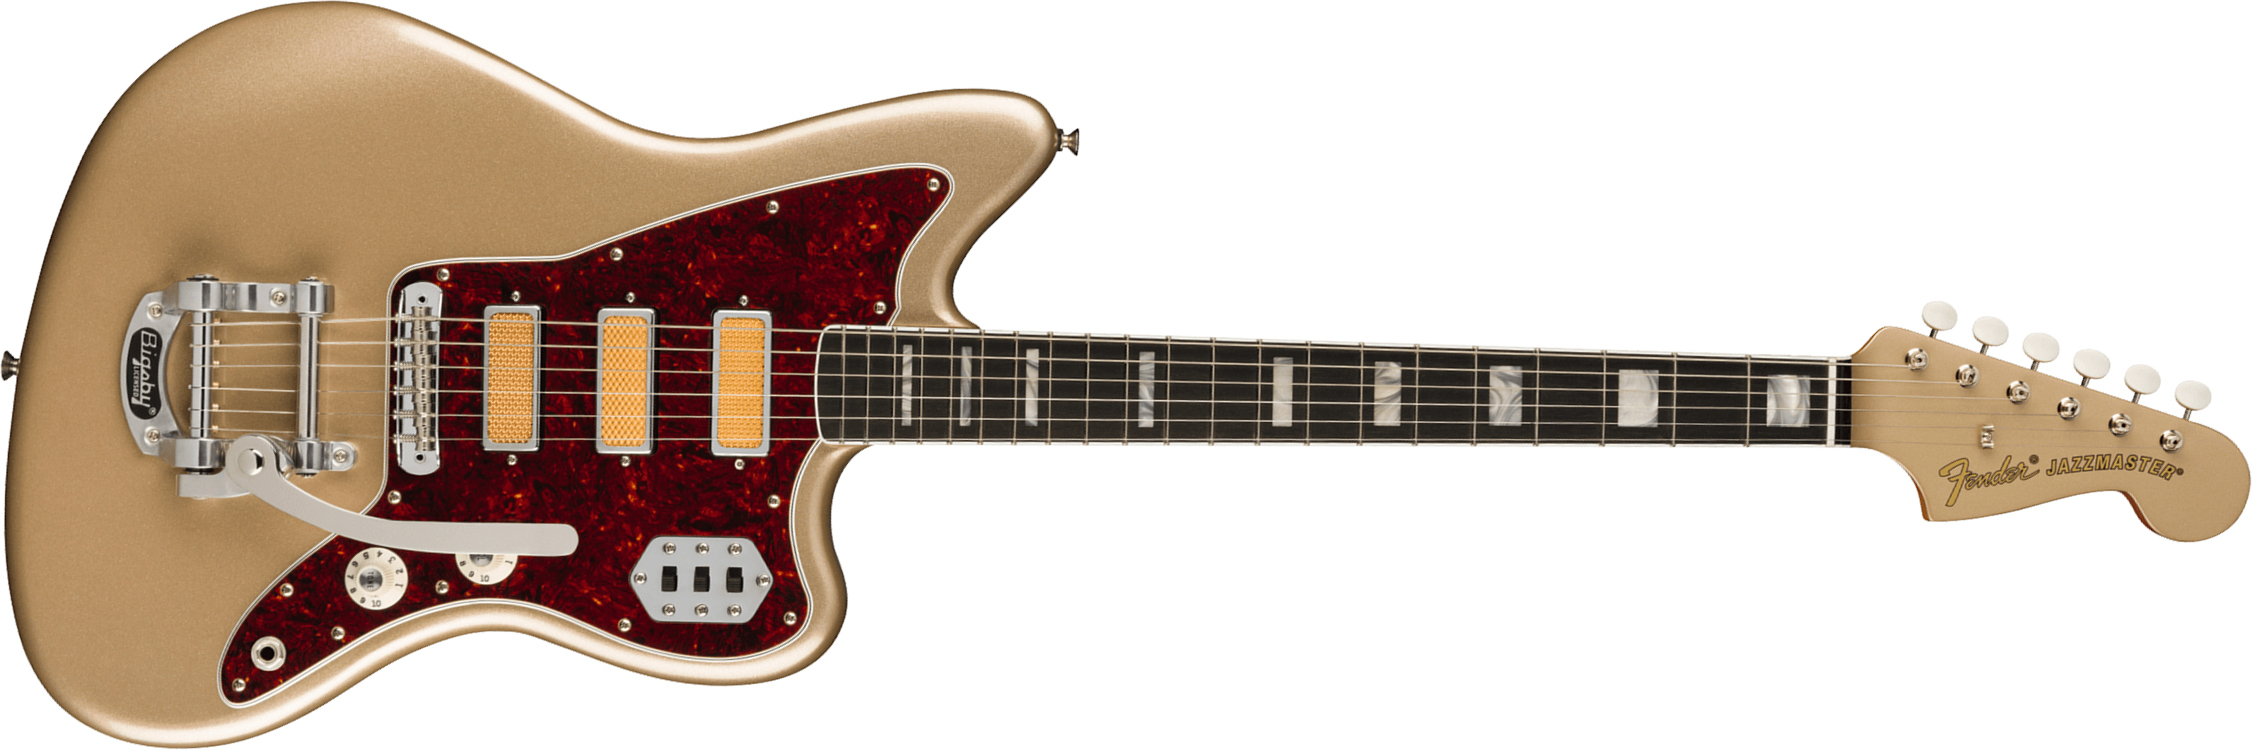 Fender Jazzmaster Gold Foil Ltd Mex 3mh Trem Bigsby Eb - Shoreline Gold - Guitarra electrica retro rock - Main picture